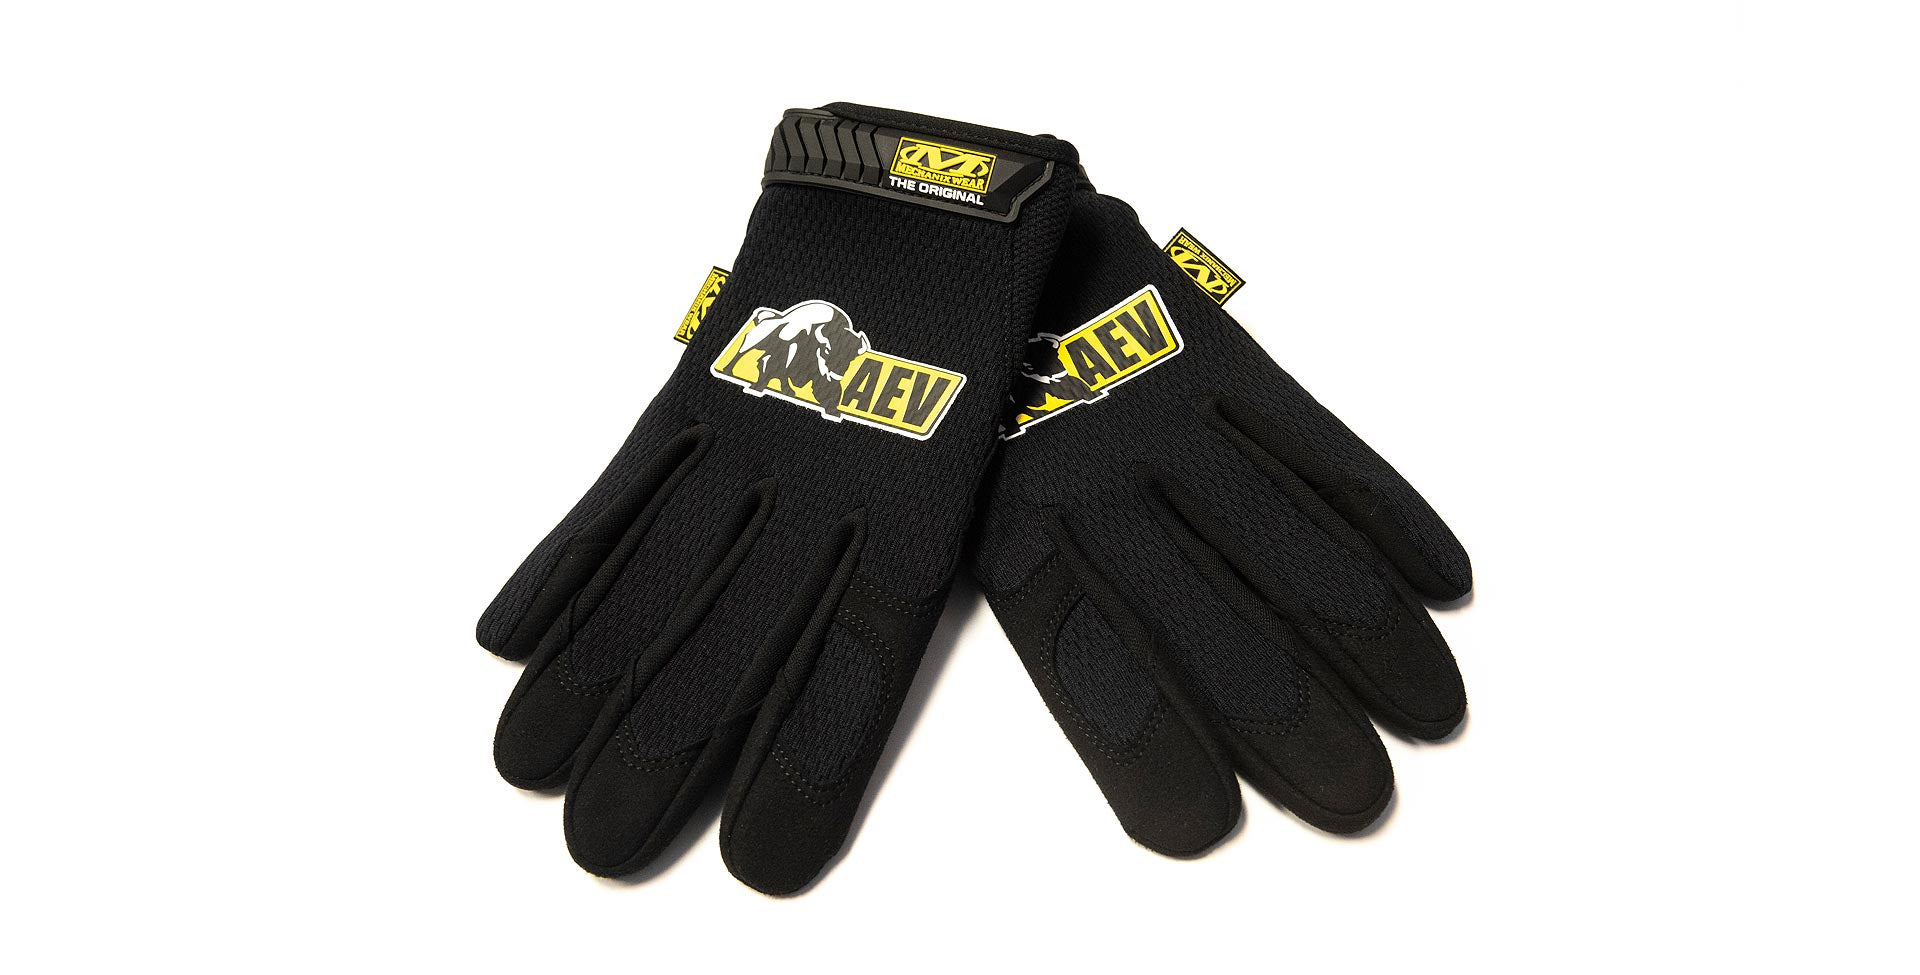 AEV Work Gloves by Mechanix